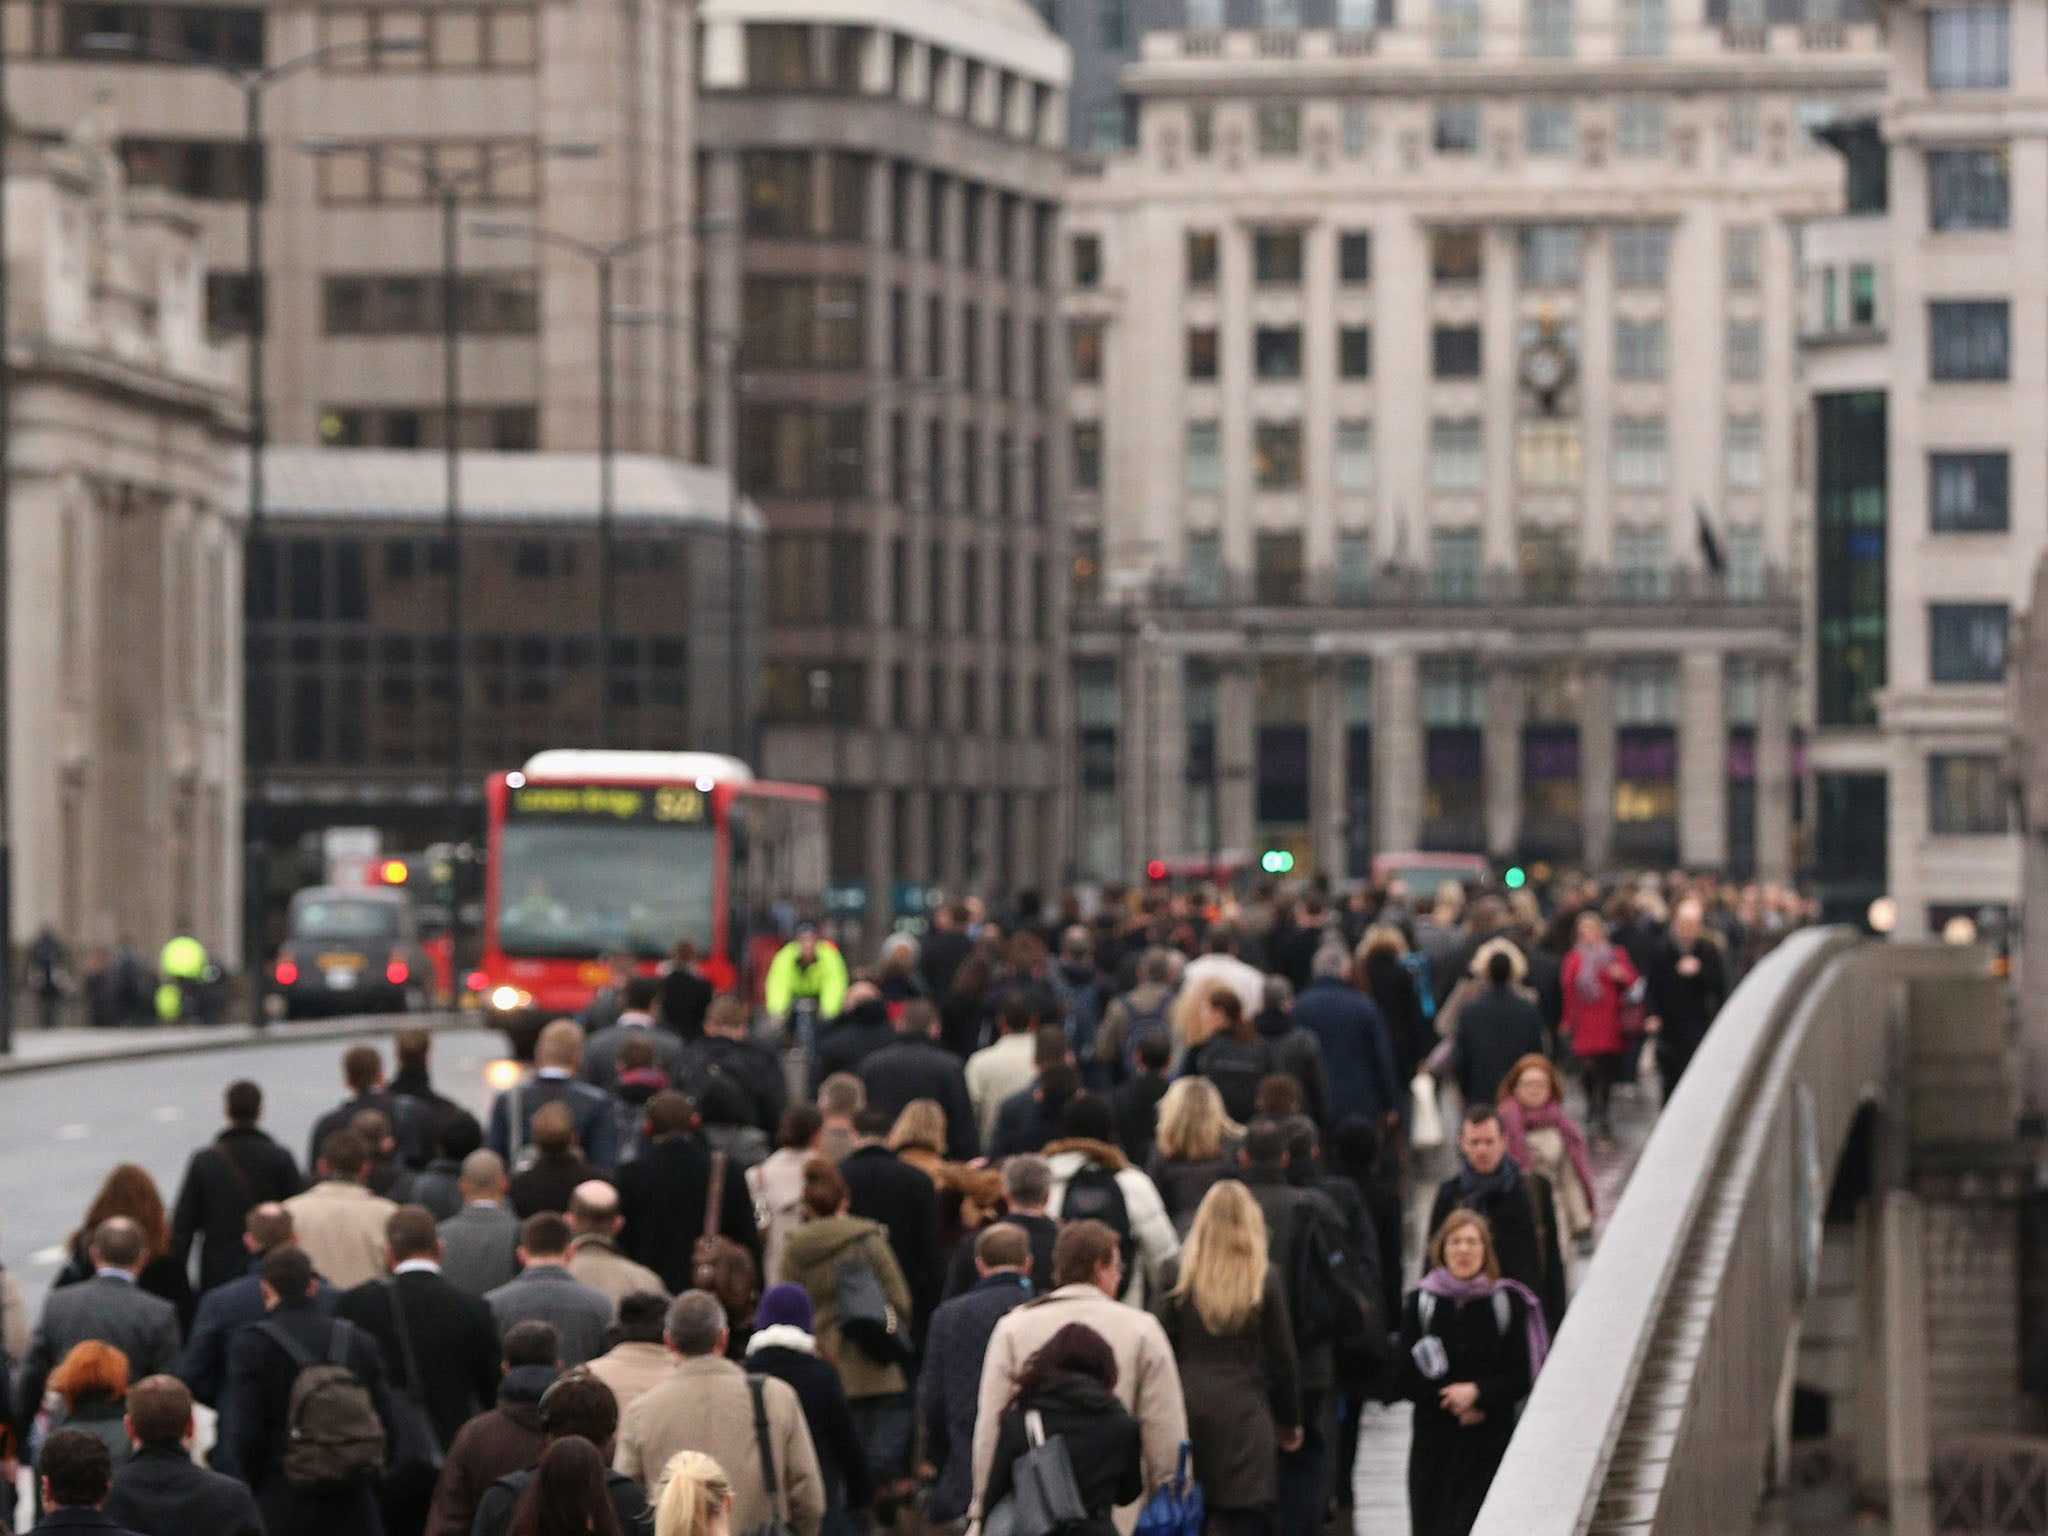 People walking to work in London